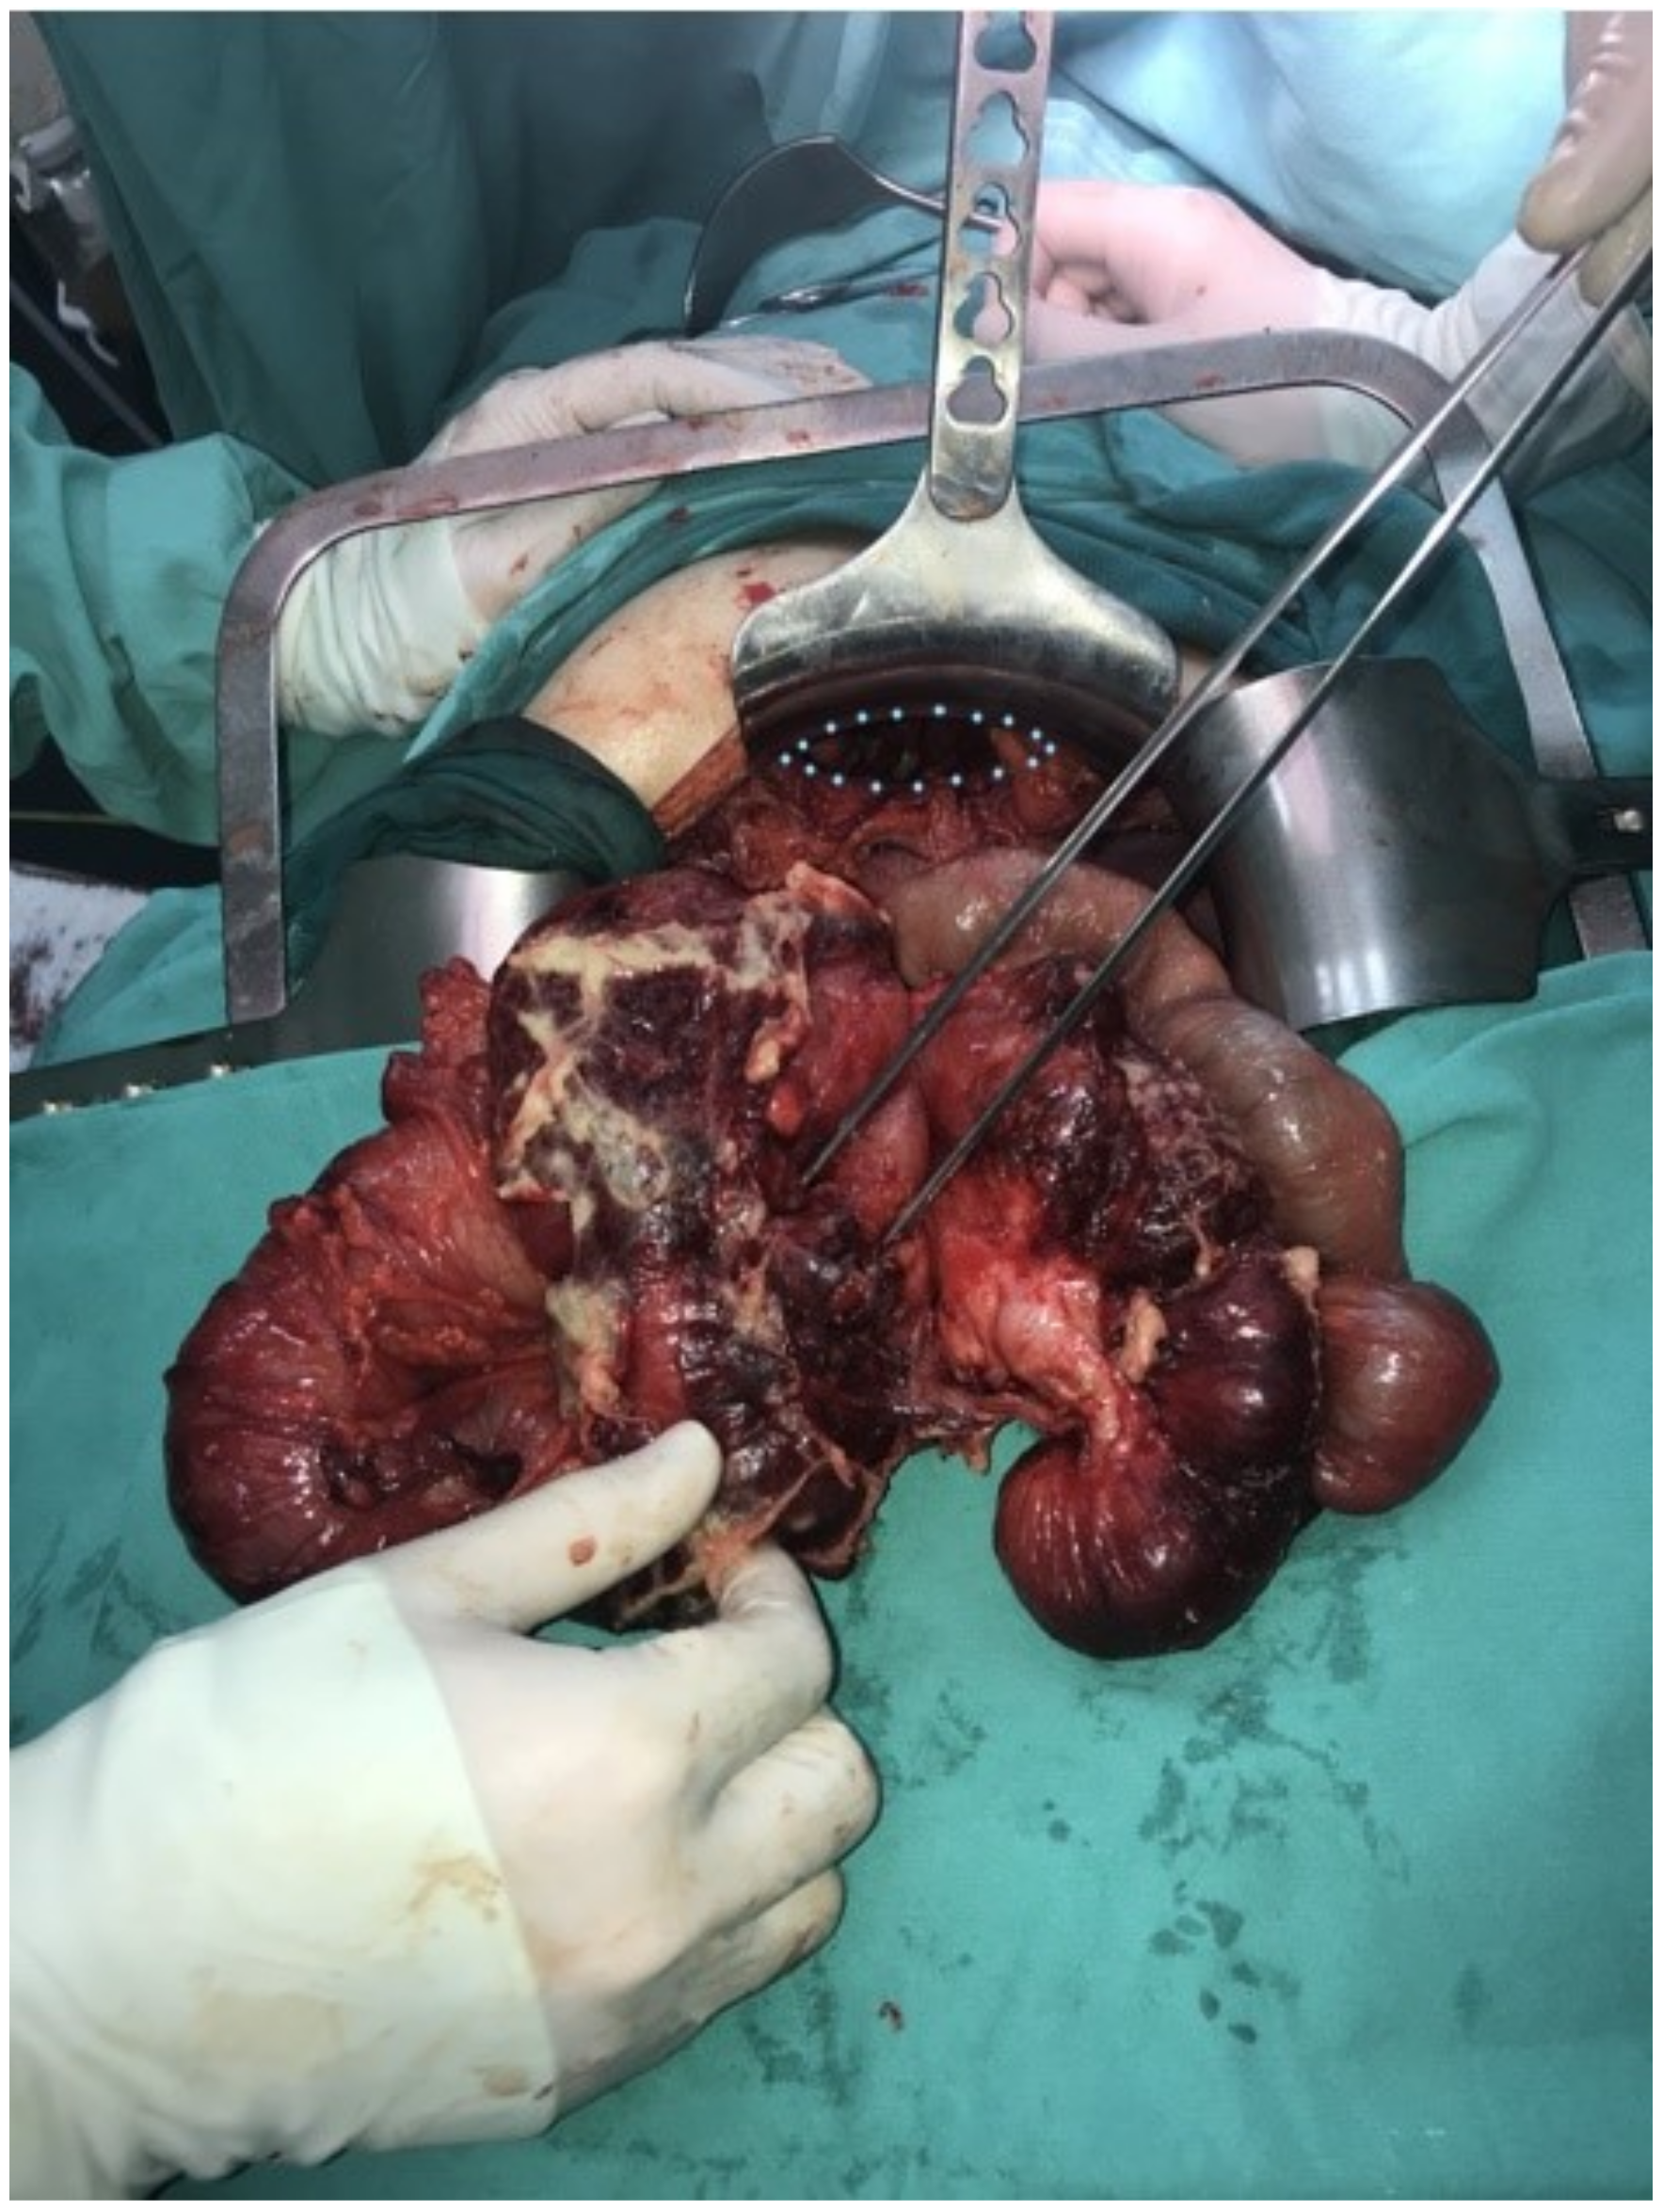 perforated appendix